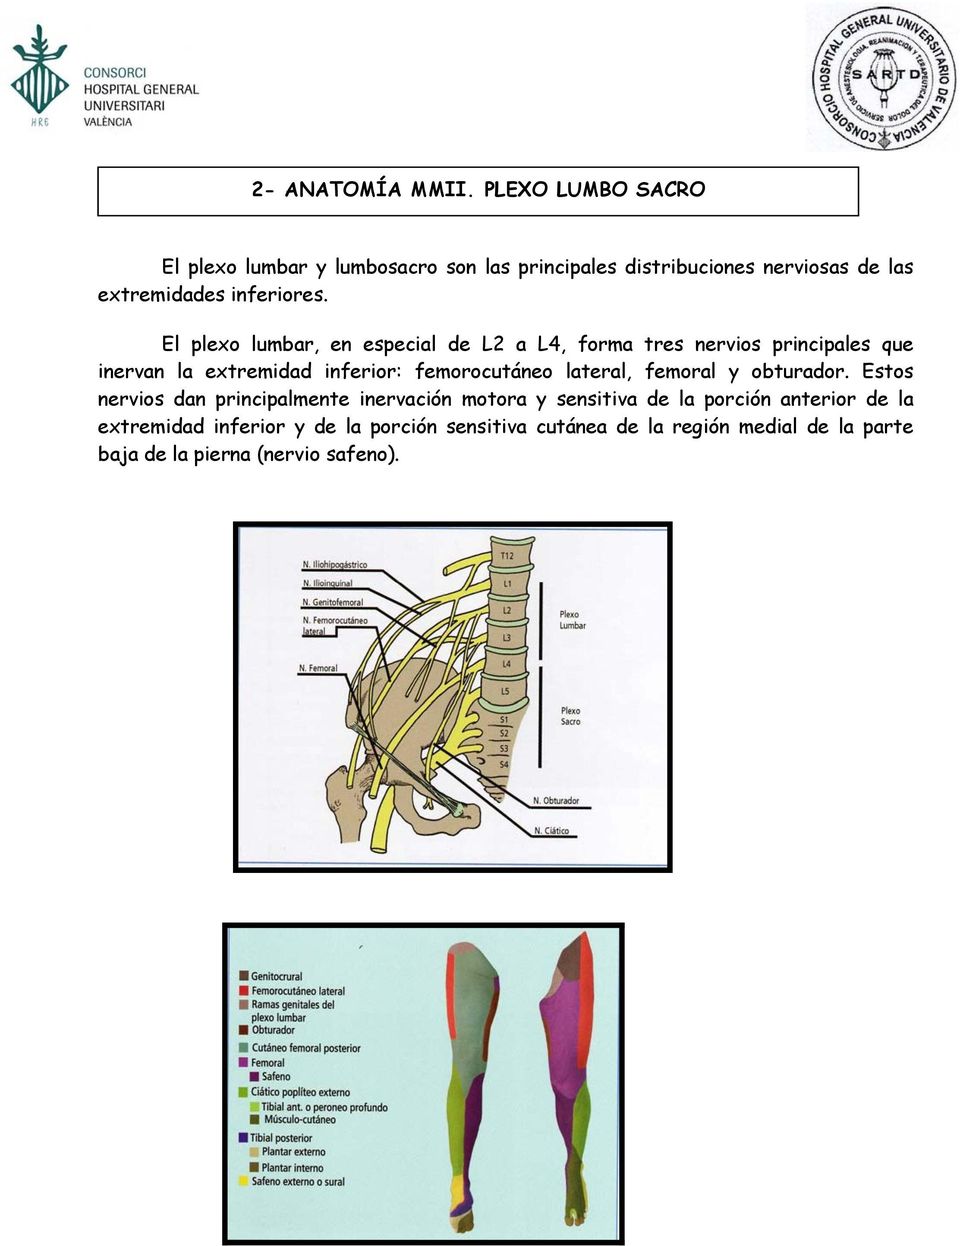 El plexo lumbar, en especial de L2 a L4, forma tres nervios principales que inervan la extremidad inferior: femorocutáneo